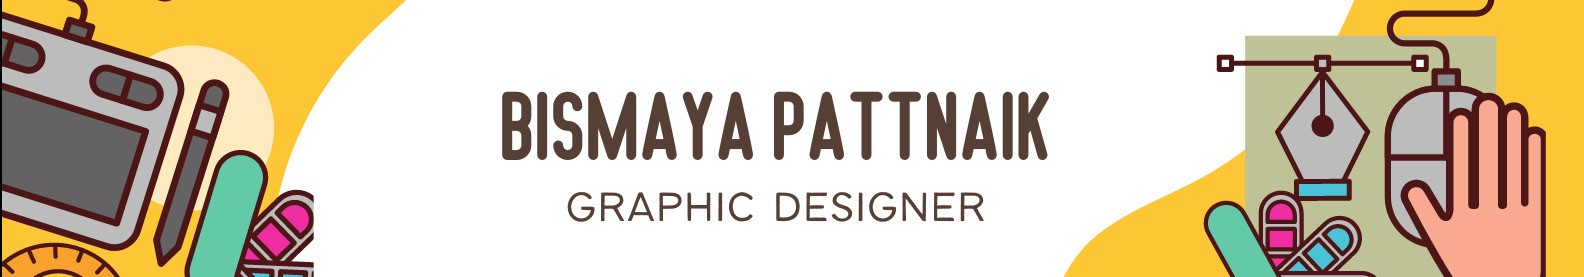 Banner de perfil de BISMAYA PATTNAIK